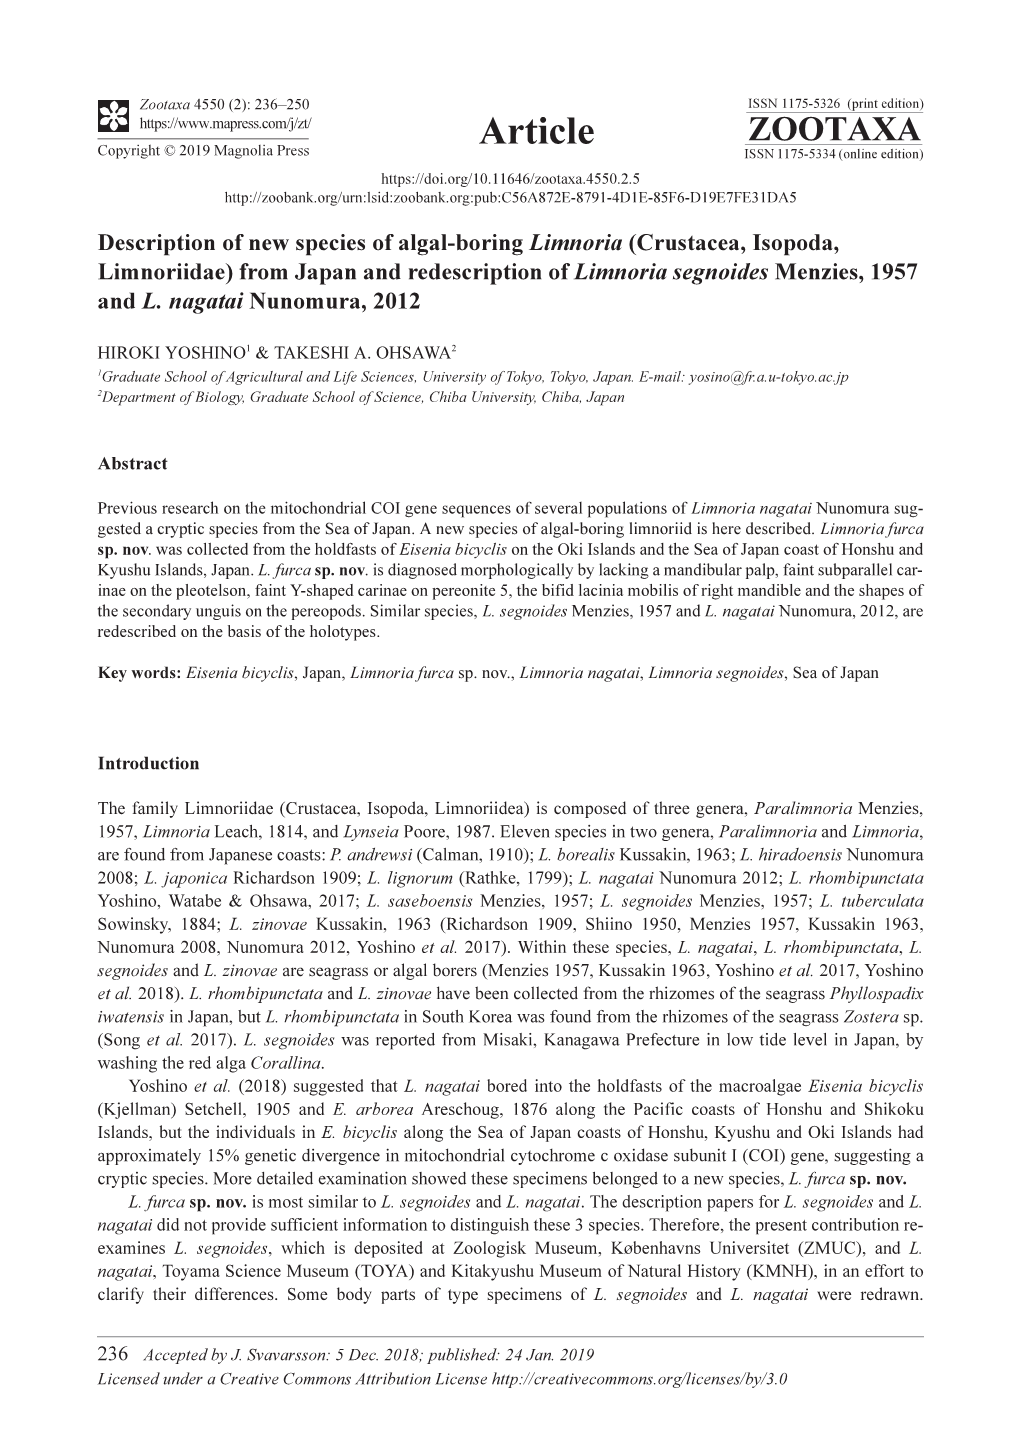 Description of New Species of Algal-Boring Limnoria (Crustacea, Isopoda, Limnoriidae) from Japan and Redescription of Limnoria Segnoides Menzies, 1957 and L